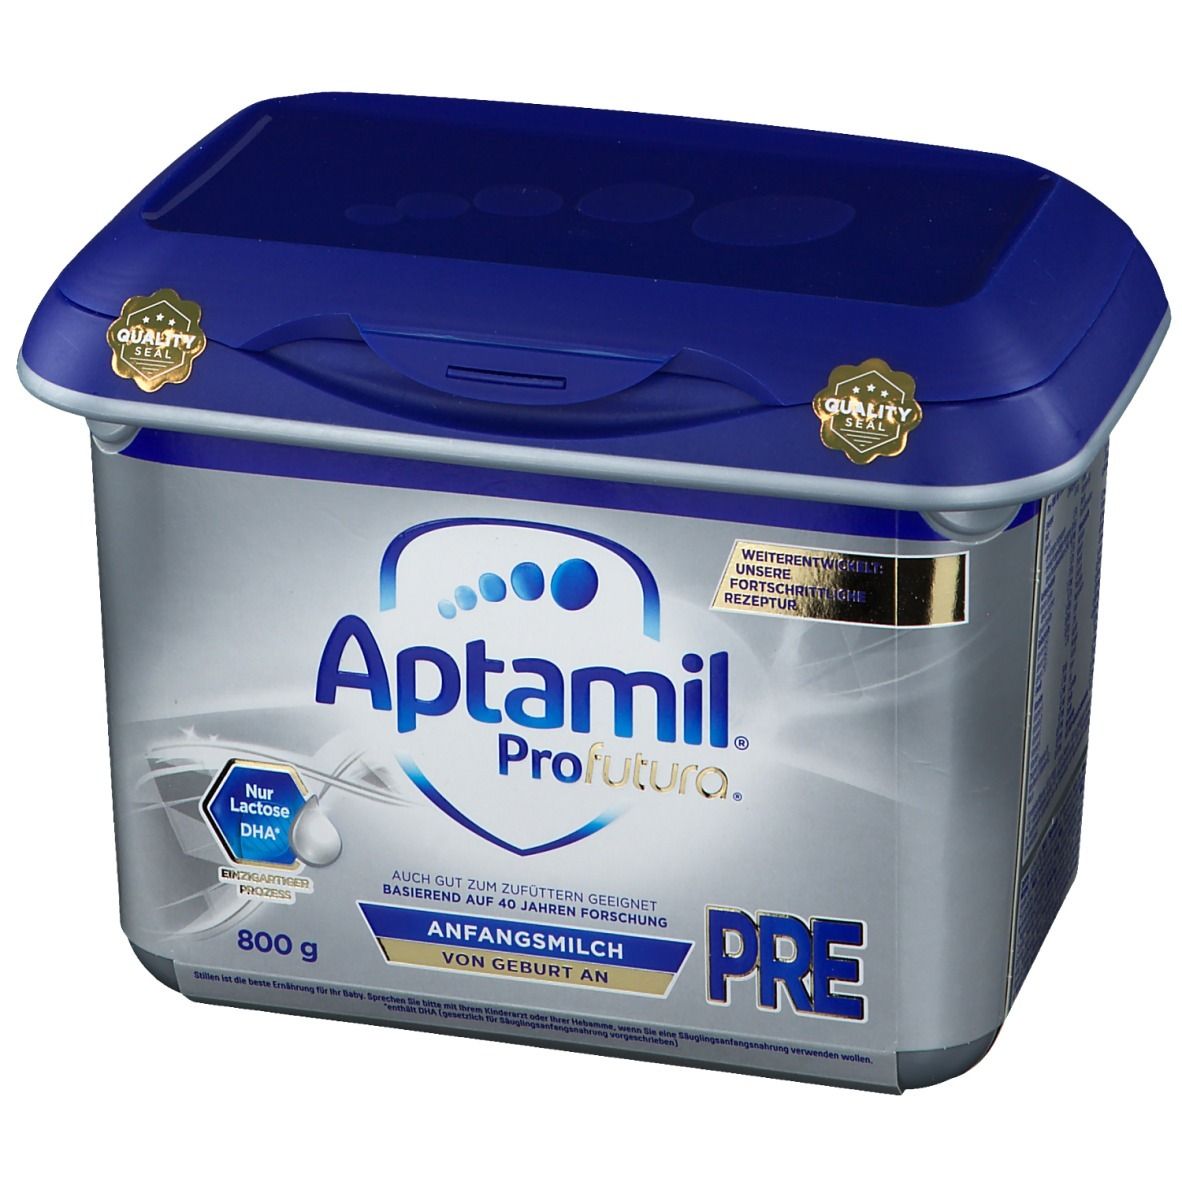 Aptamil® Profutura Pre Anfangsmilch von Geburt an